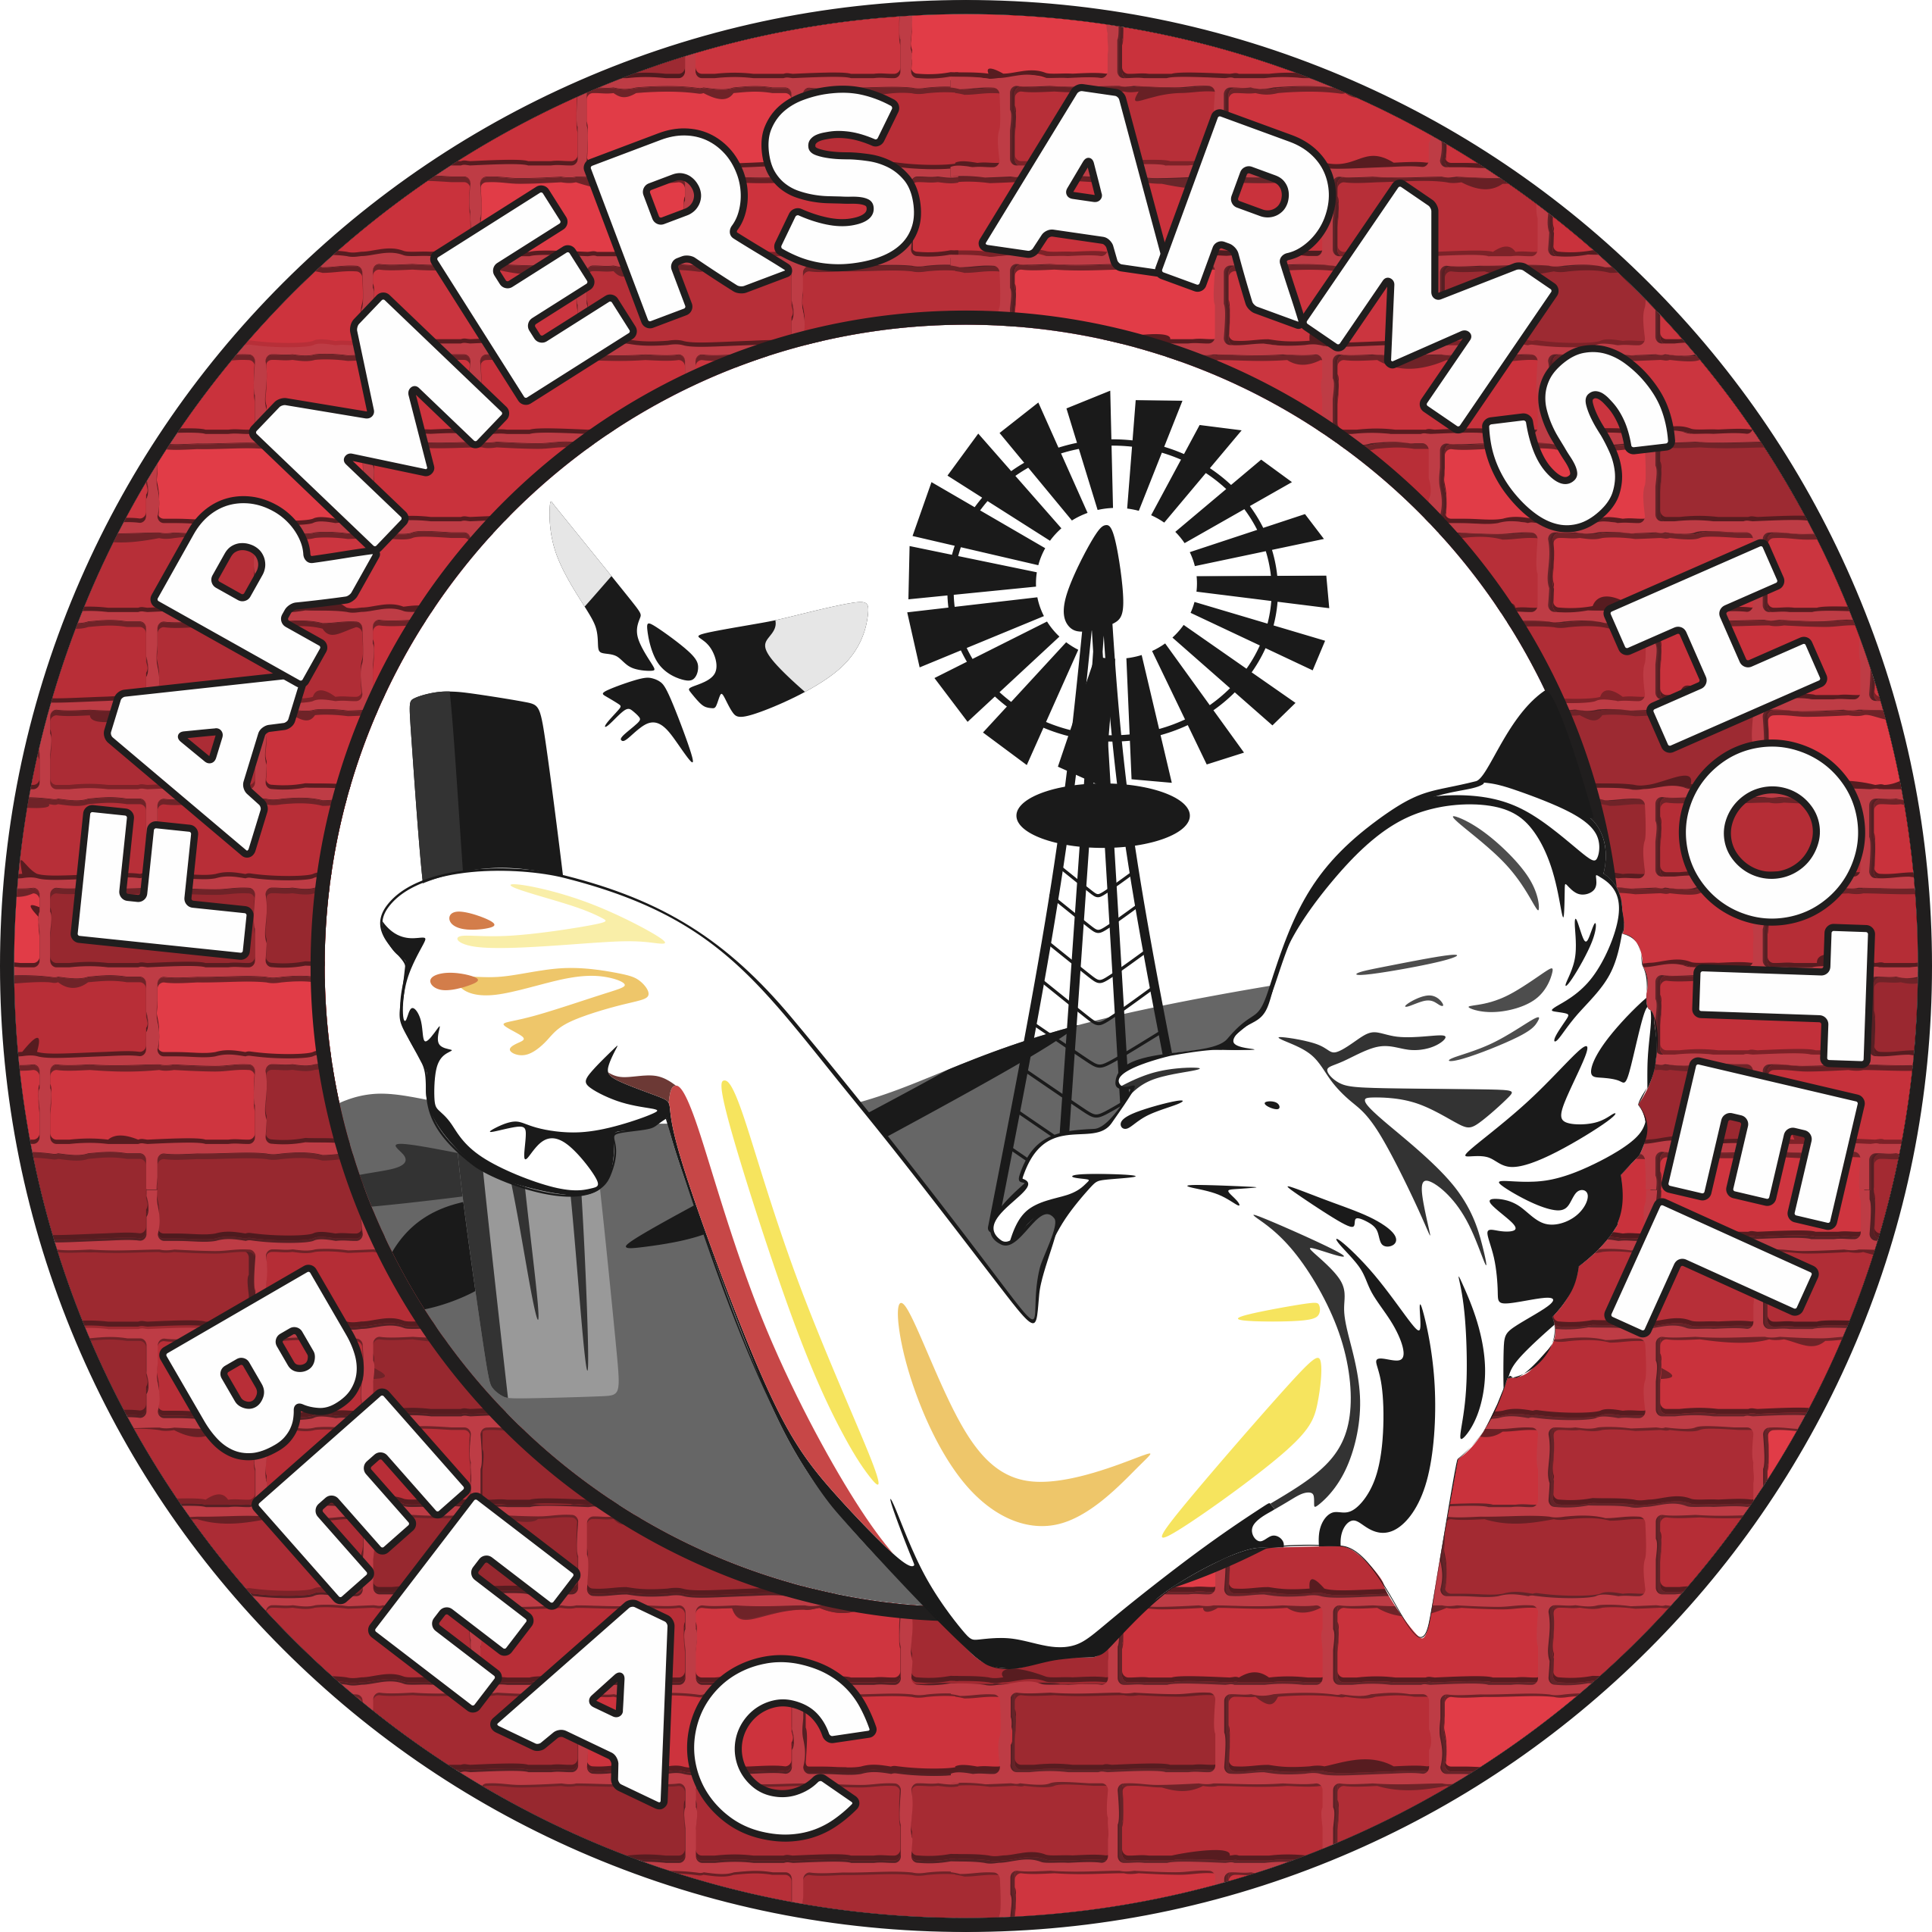 Farmers Arms Hotel Beeac